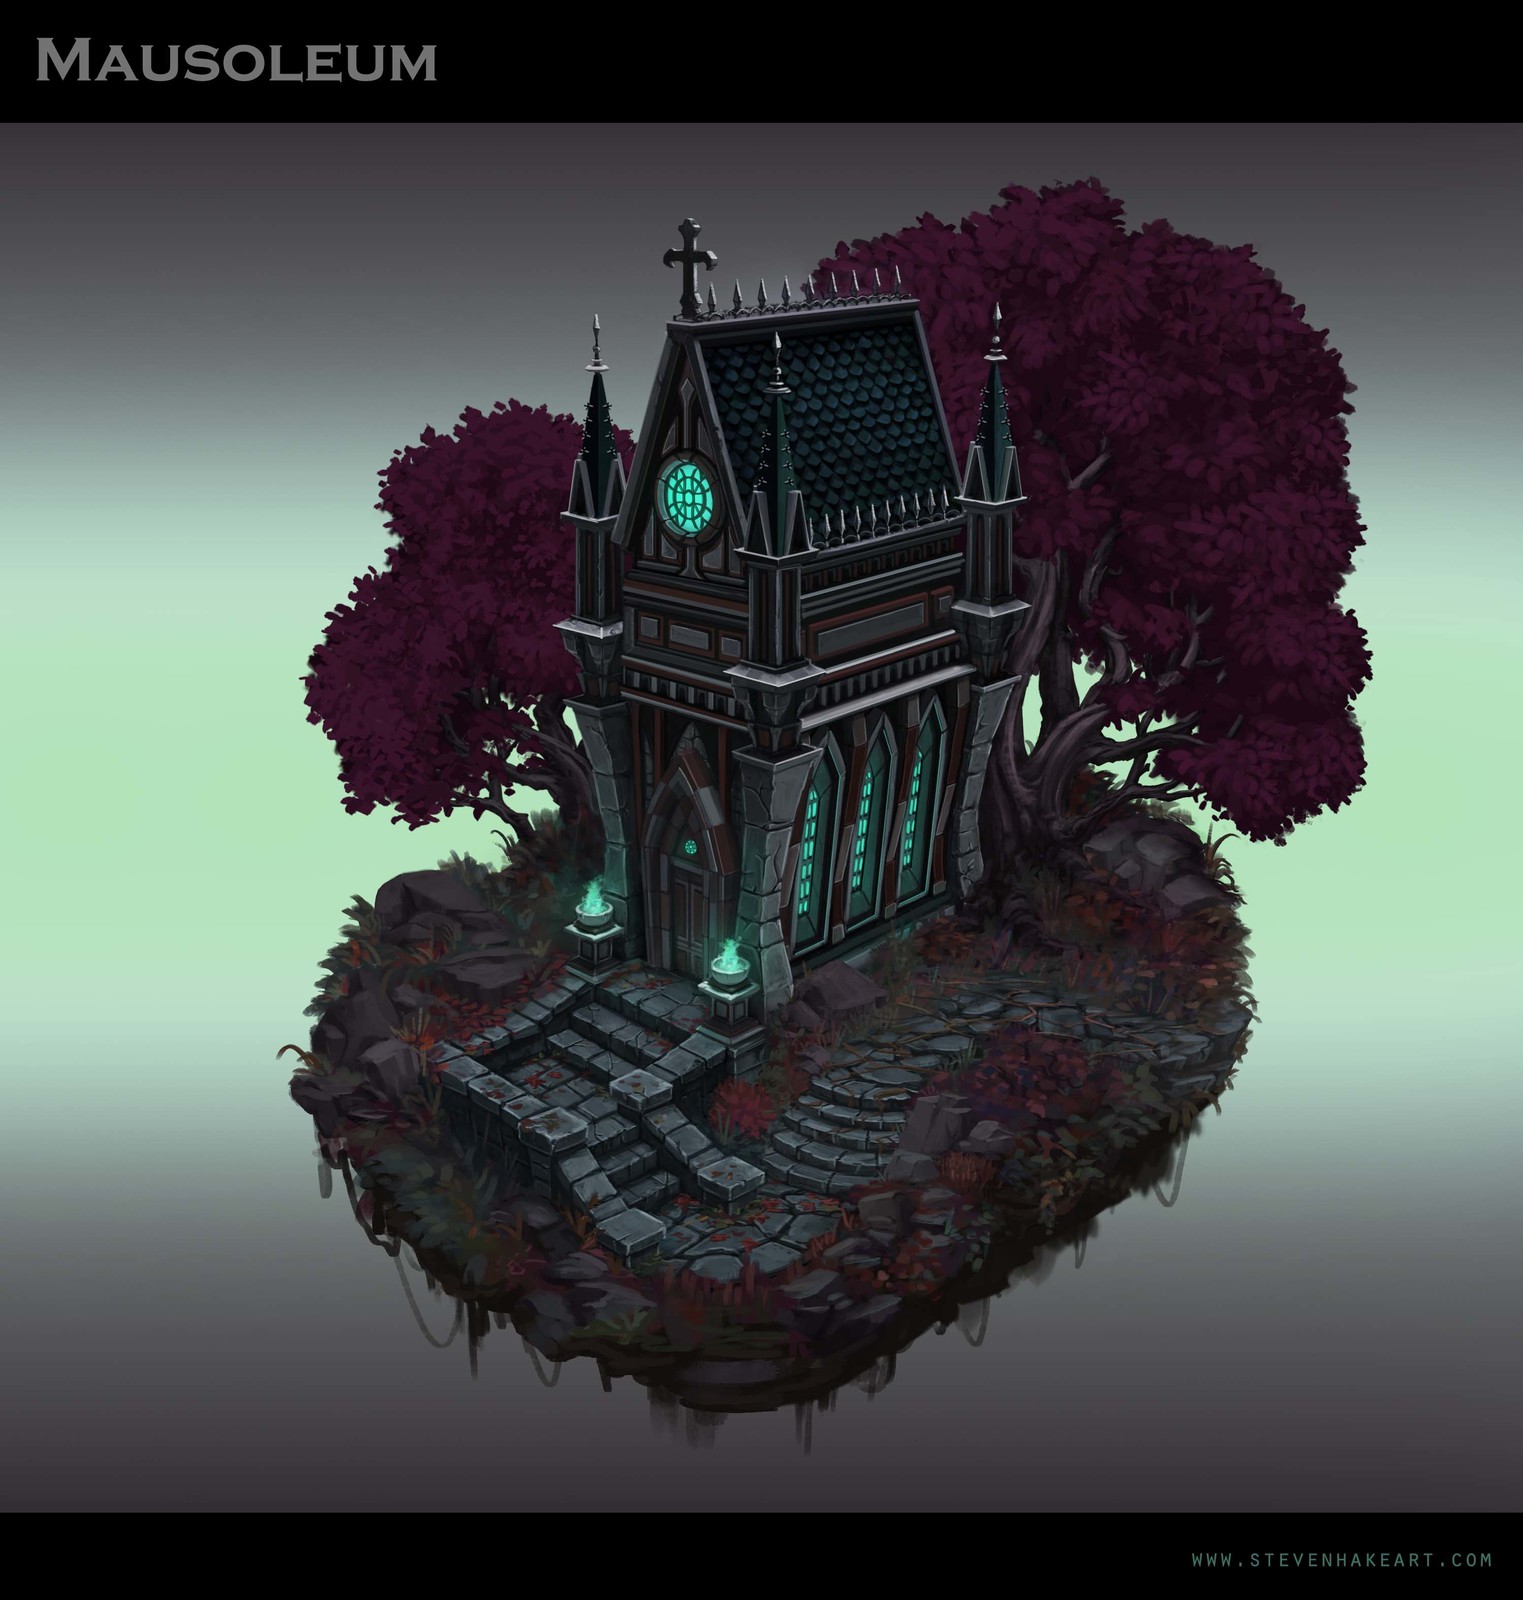 the Mausoleum